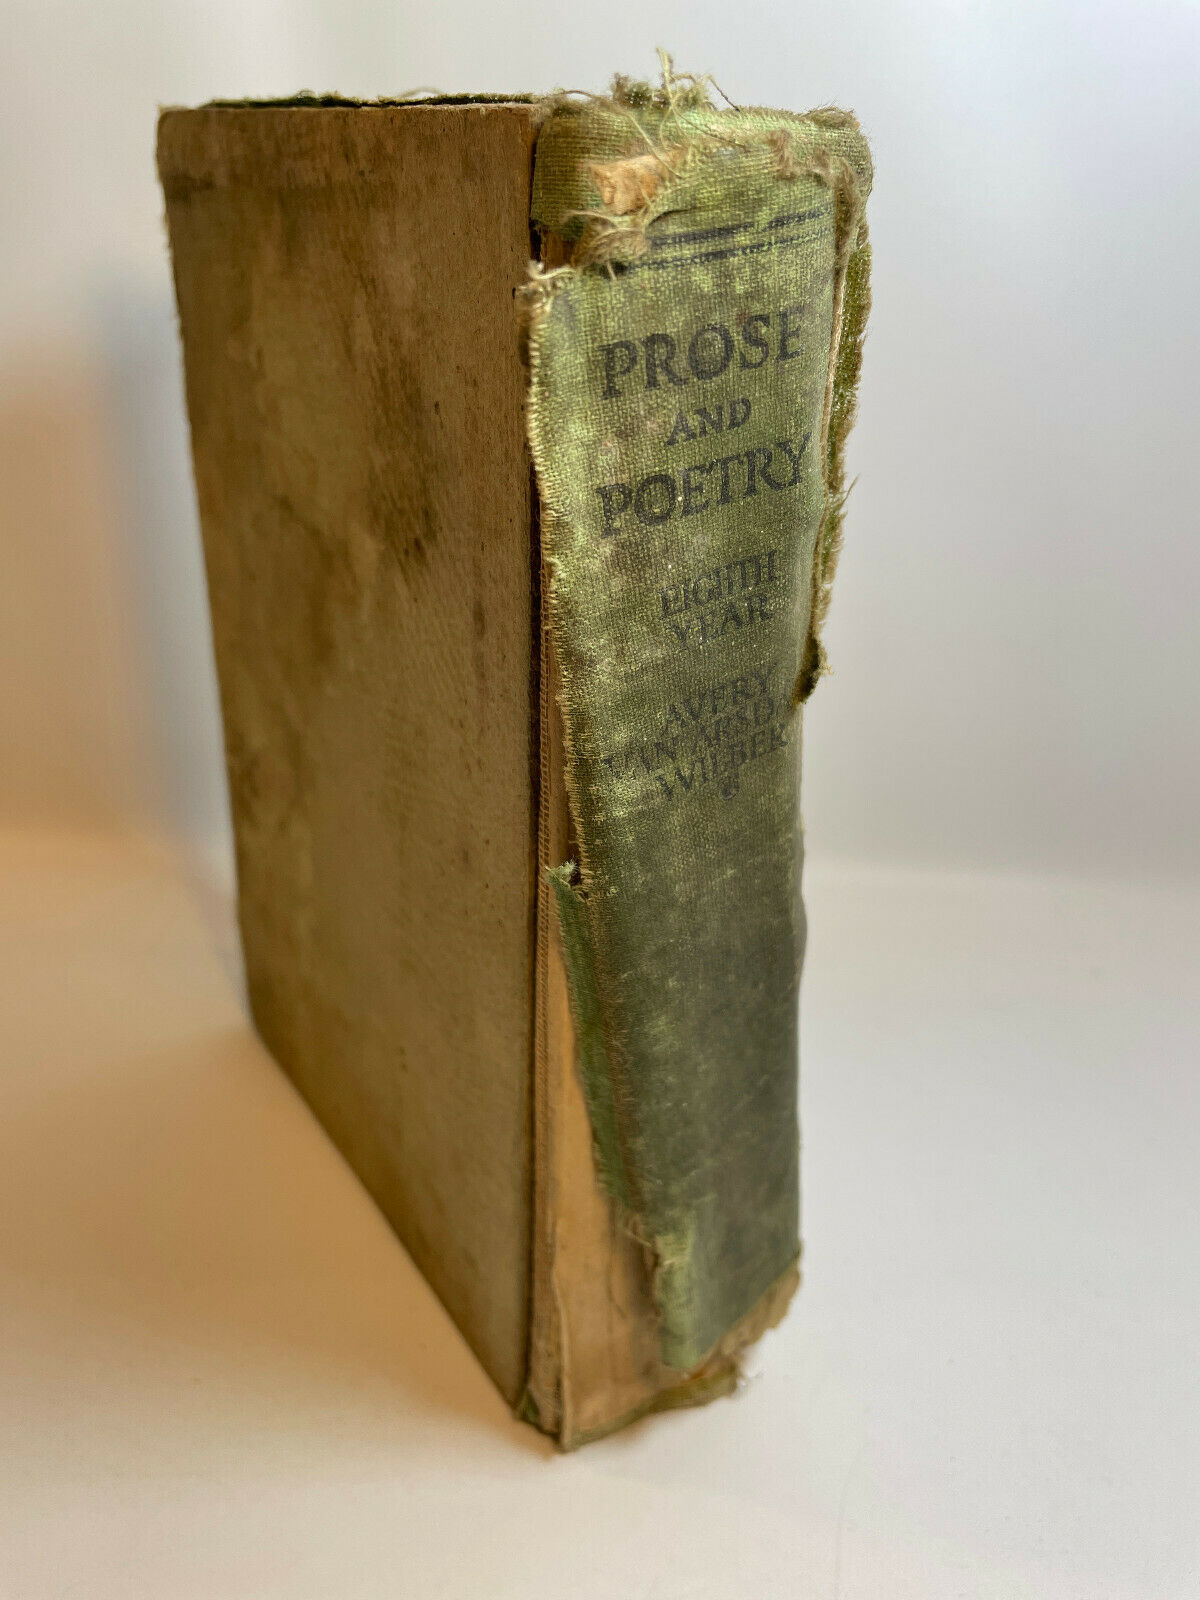 Prose and Poetry Eighth Year Antique Book Avery - Van Arskale - Wilber